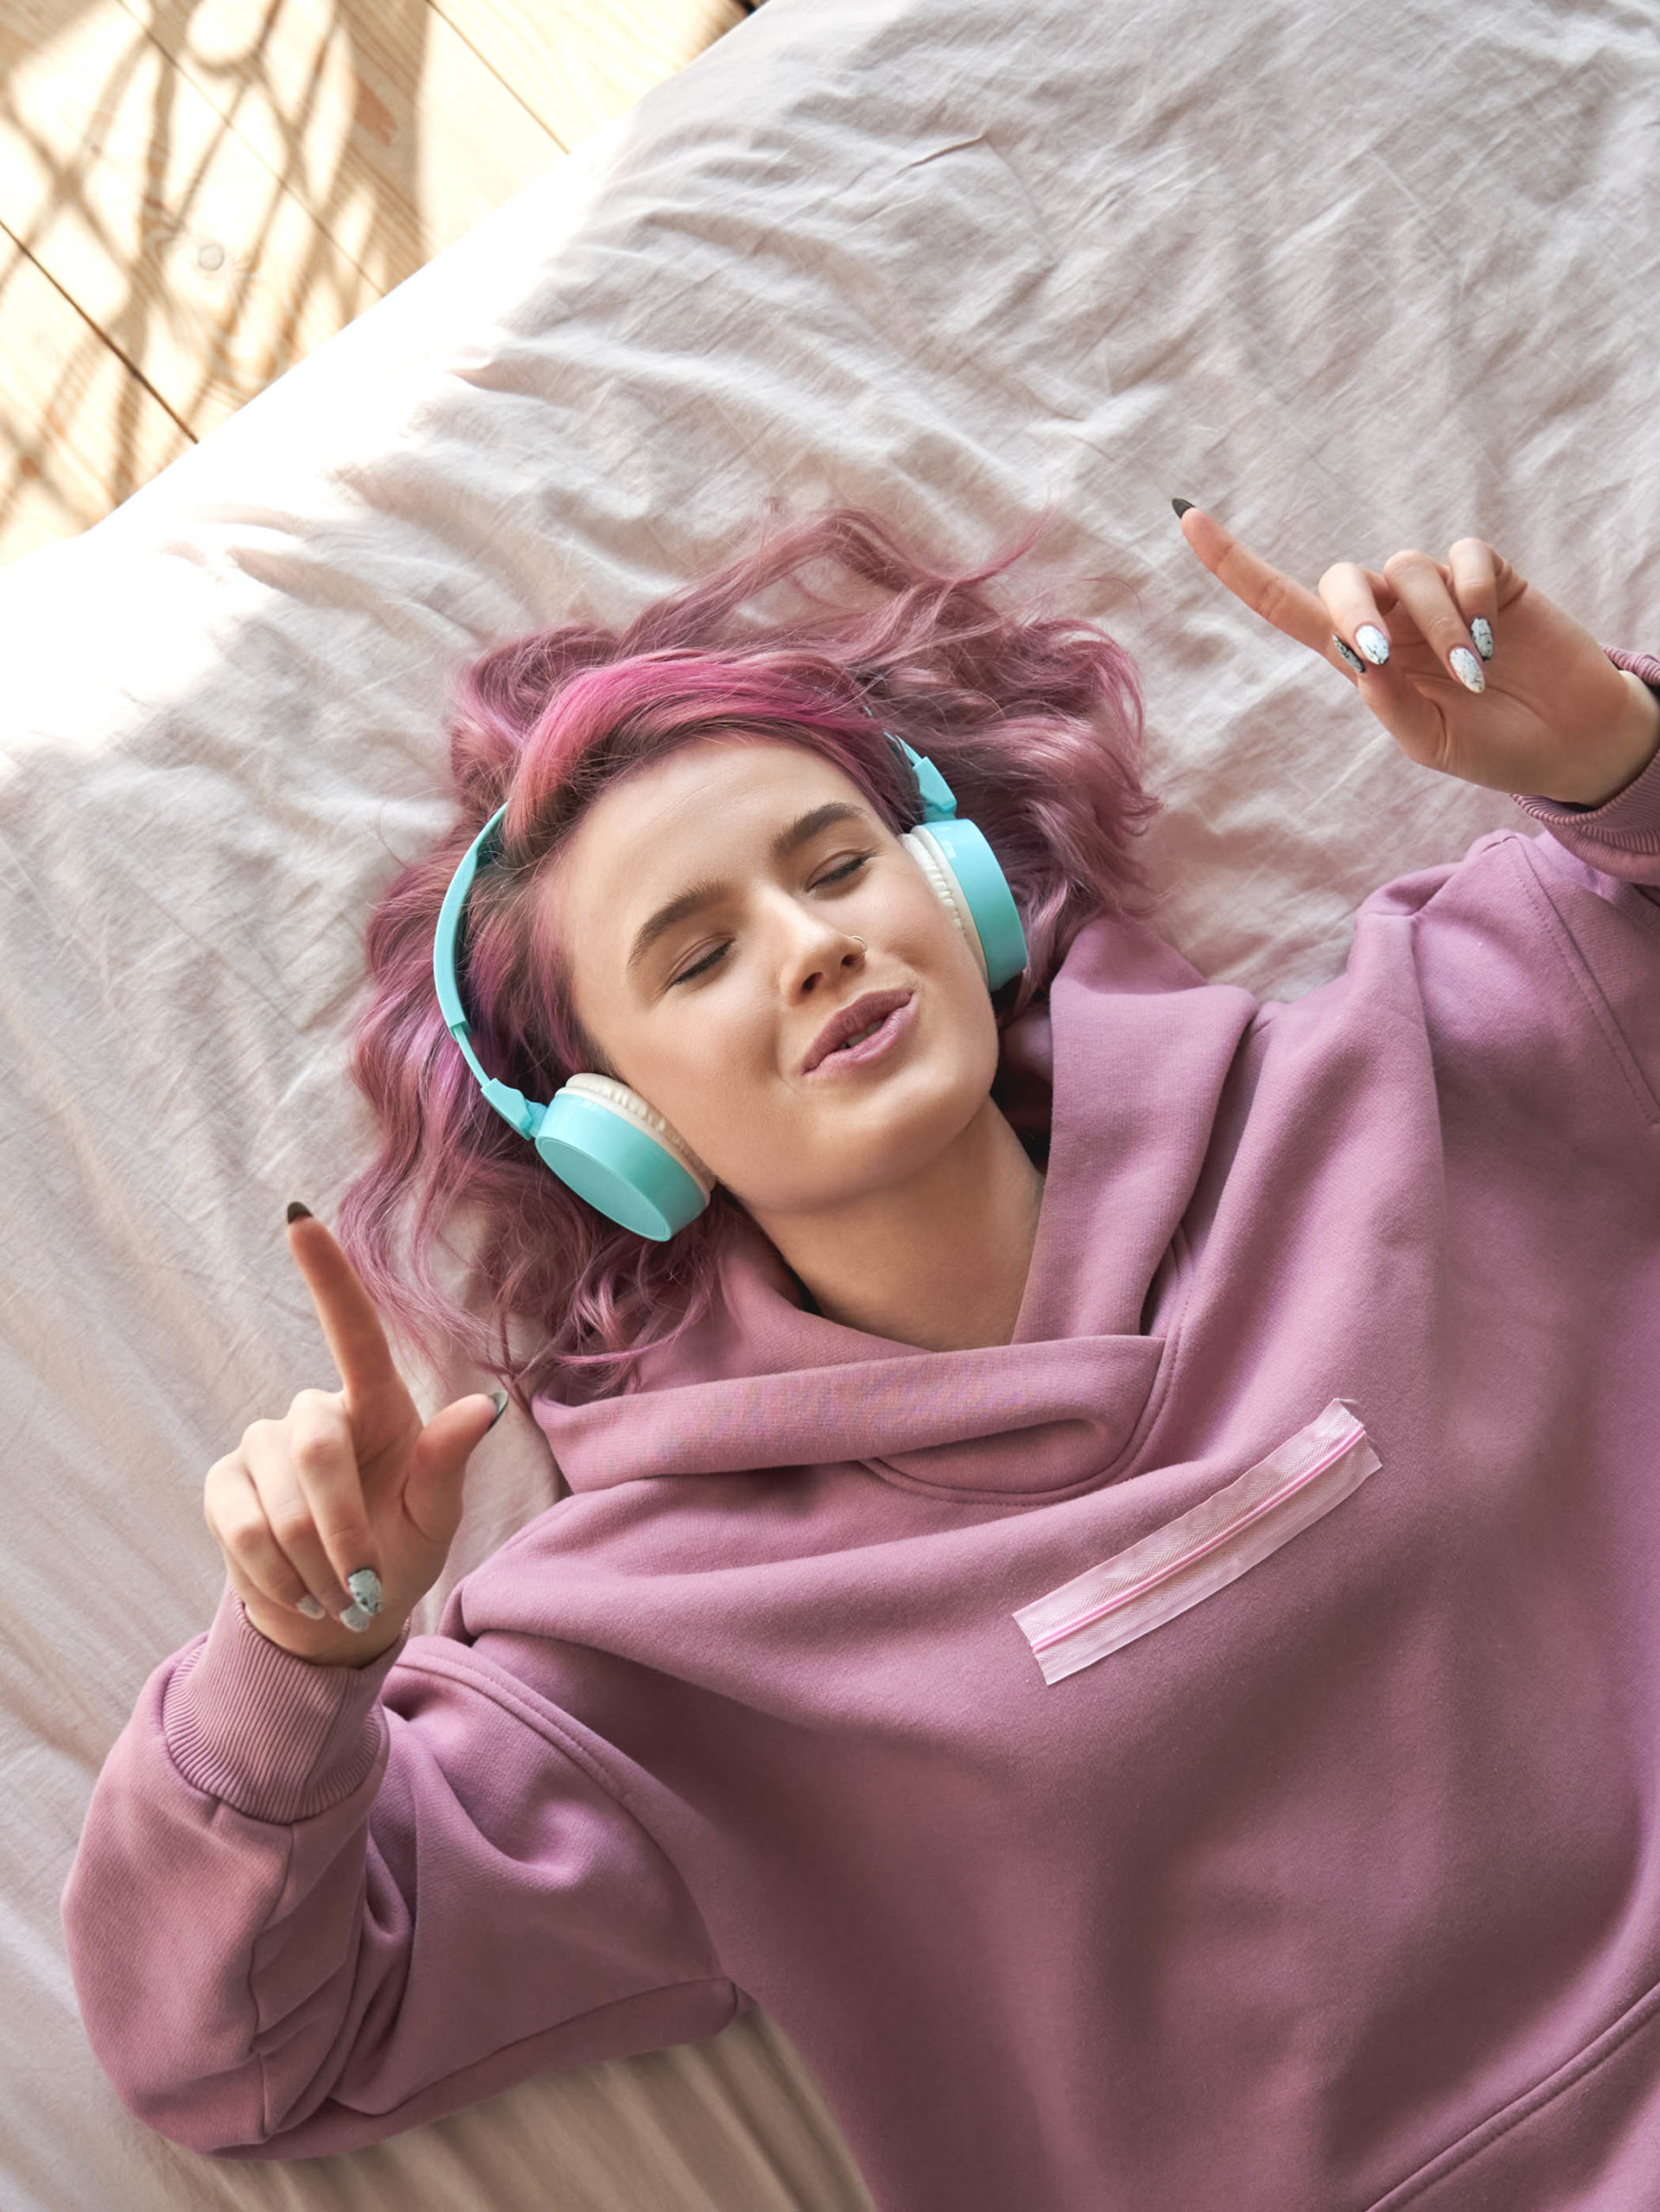 teen girl wearing headphones listening to music singing along